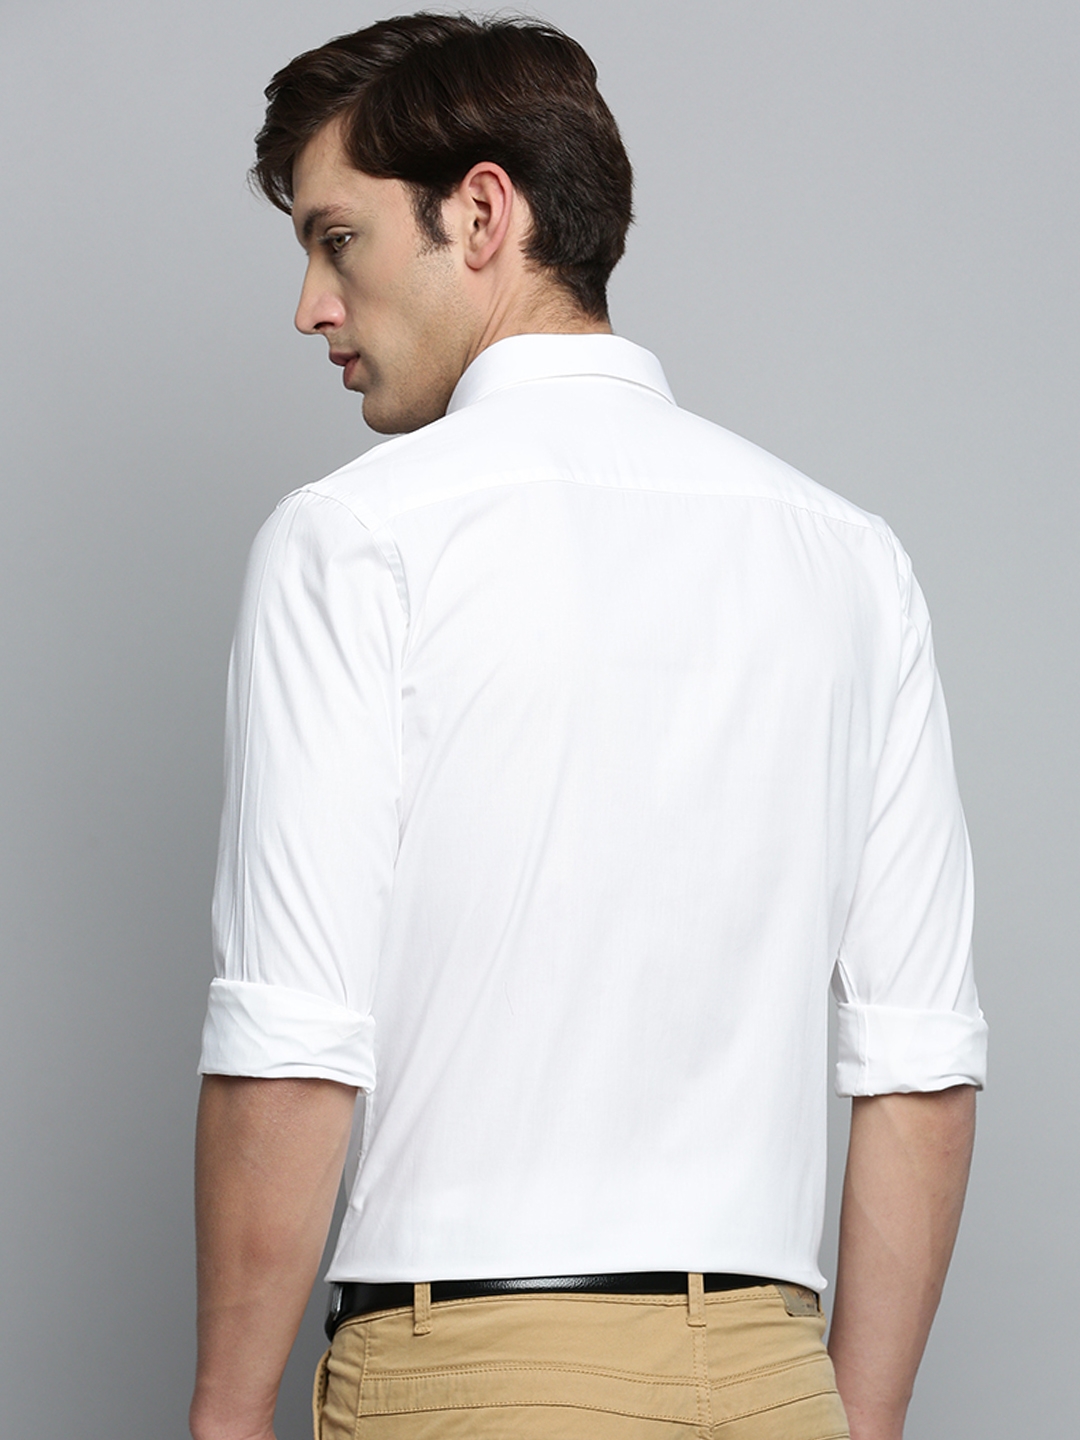 Showoff | SHOWOFF Men's Spread Collar Solid White Smart Shirt 3